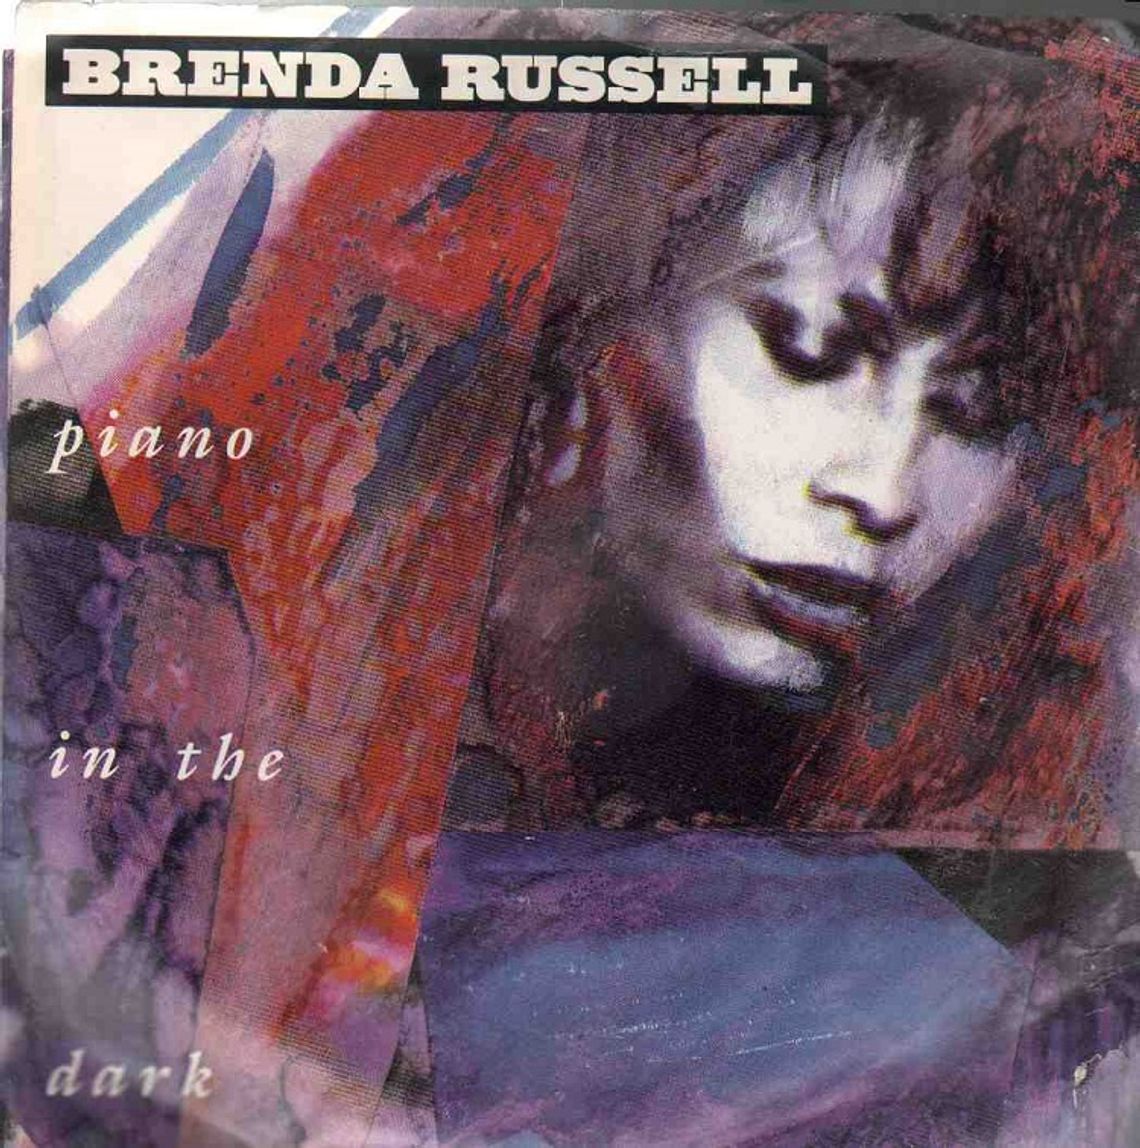 BRENDA RUSSELL "Piano in the dark"